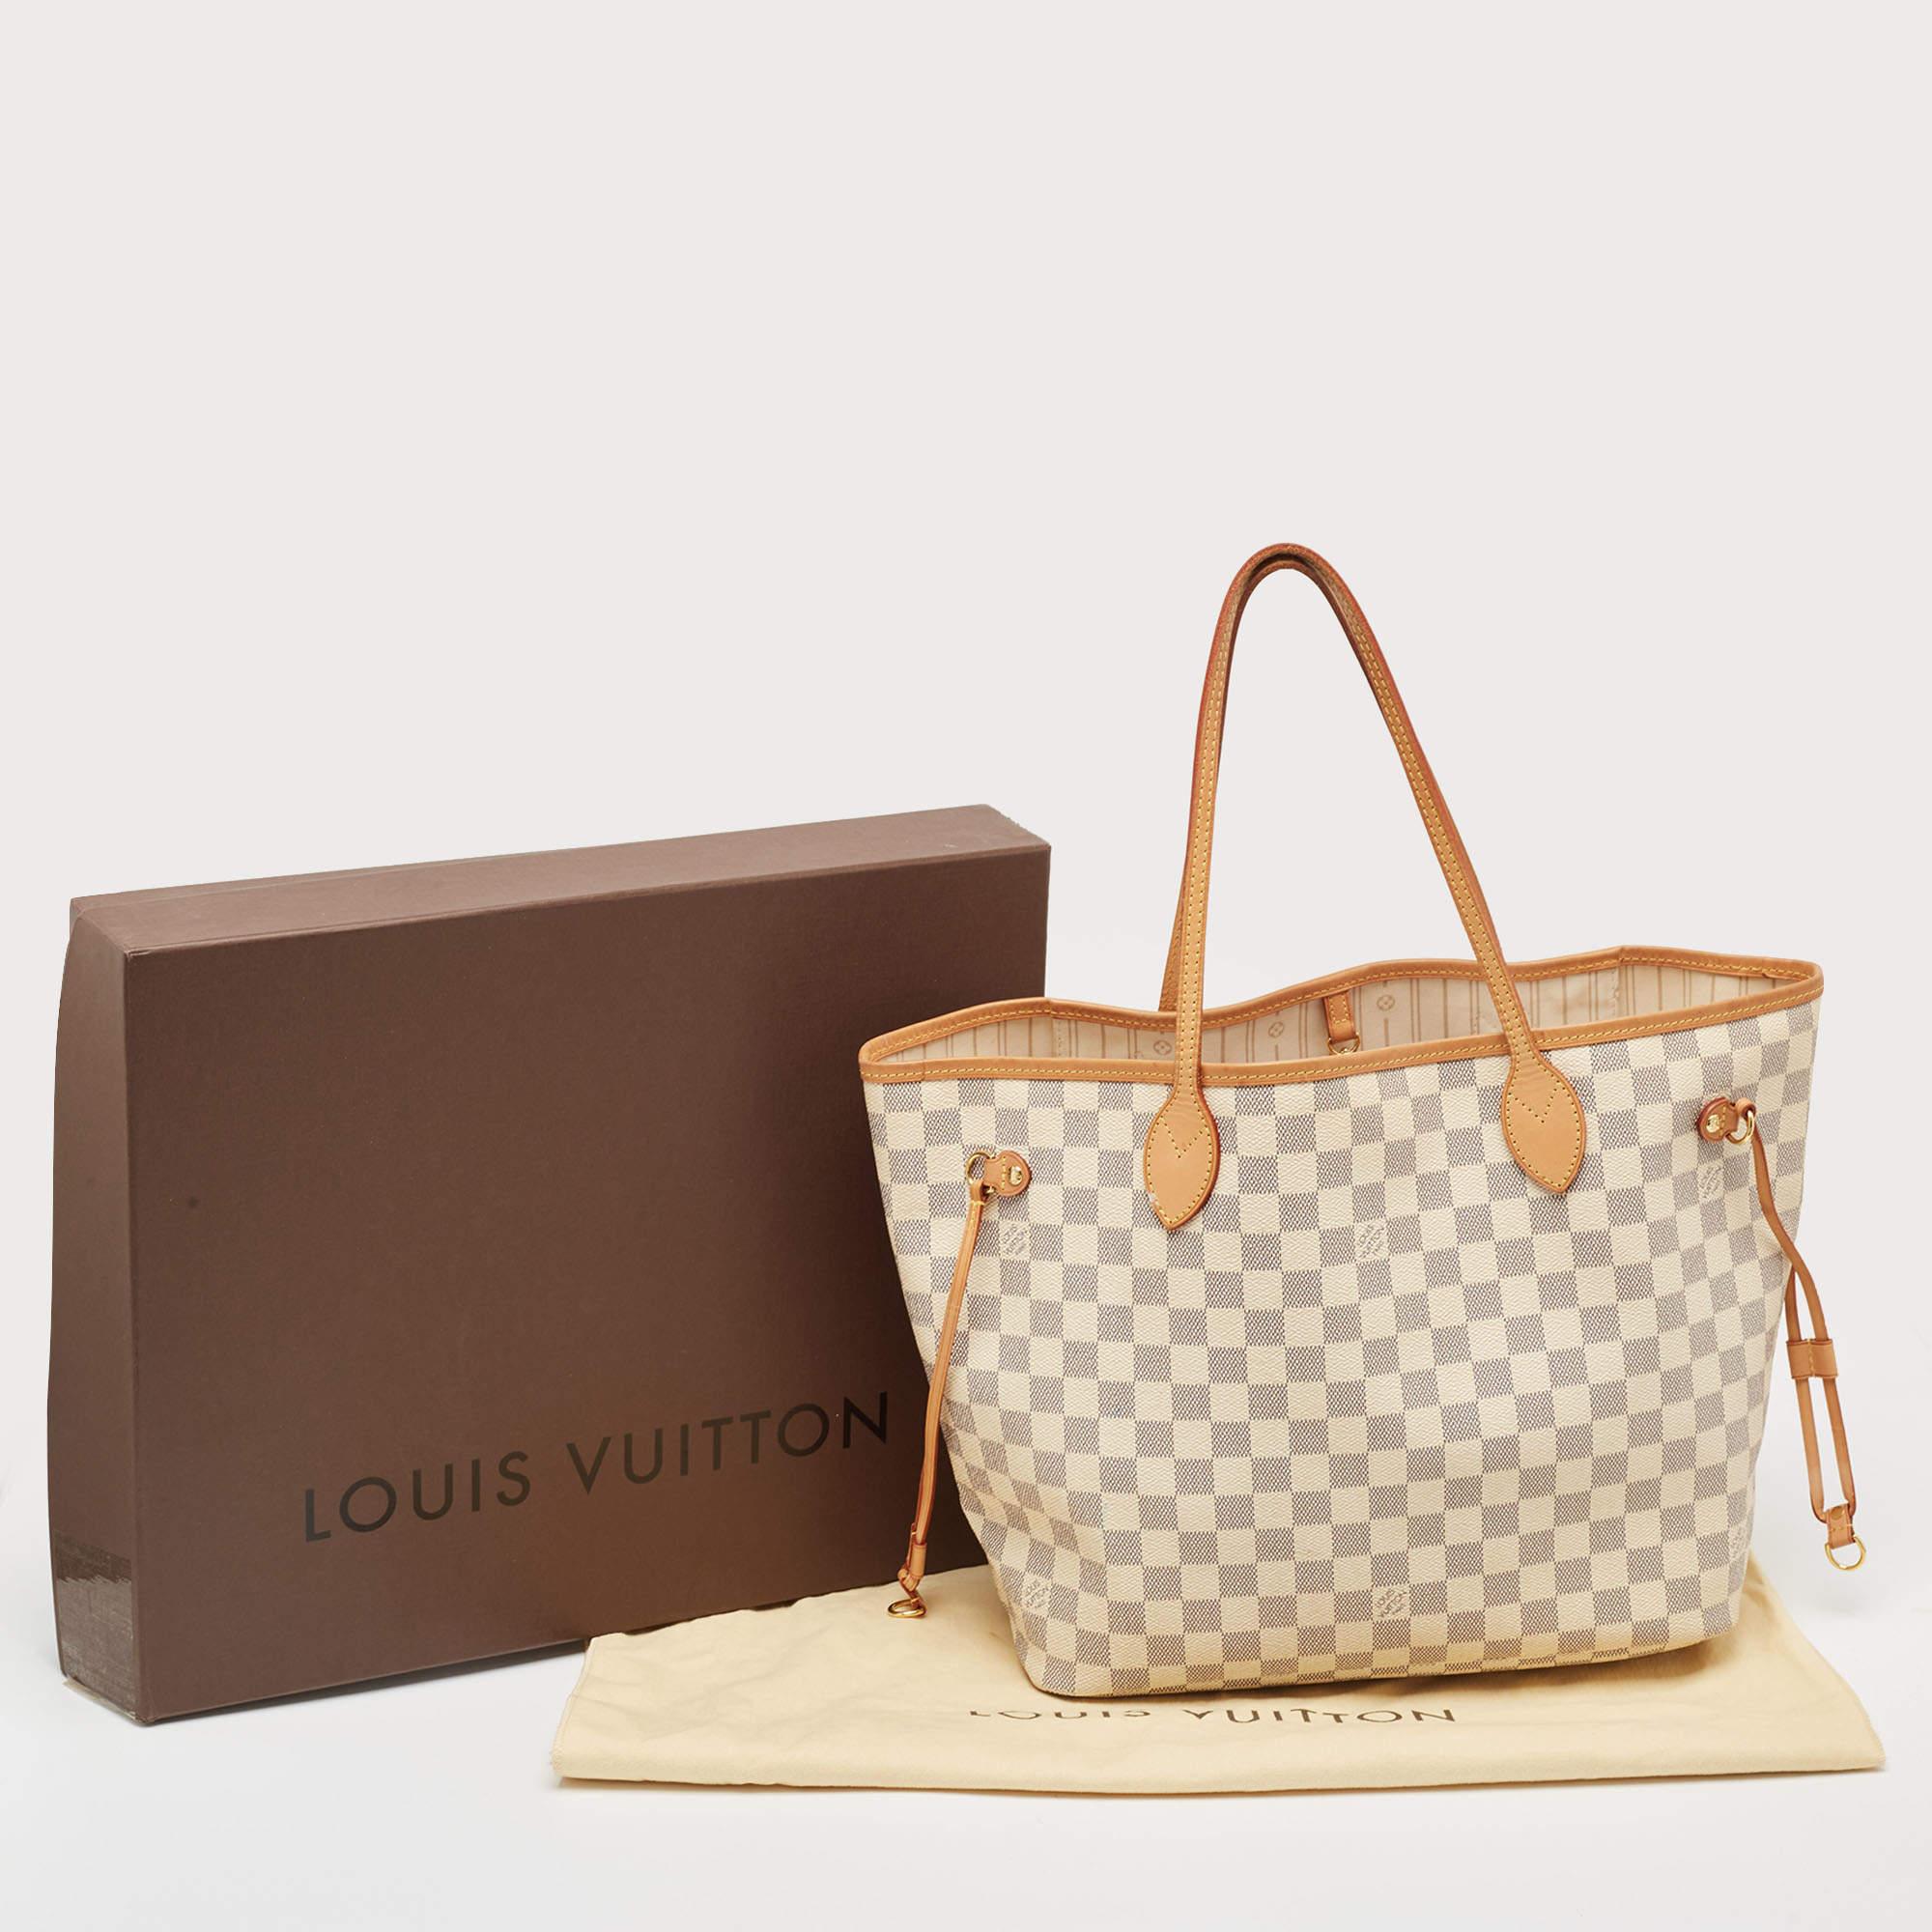 Louis Vuitton Damier Azur Canvas Neverfull MM Bag 9